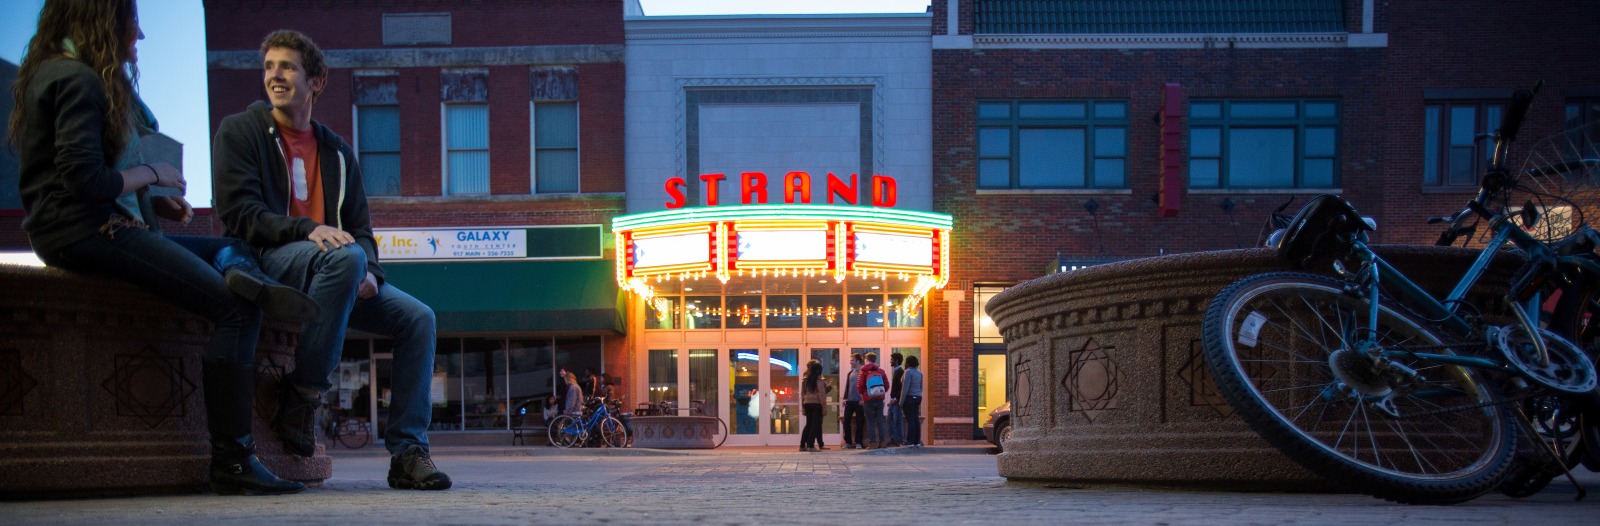 The Strand Theatre at night